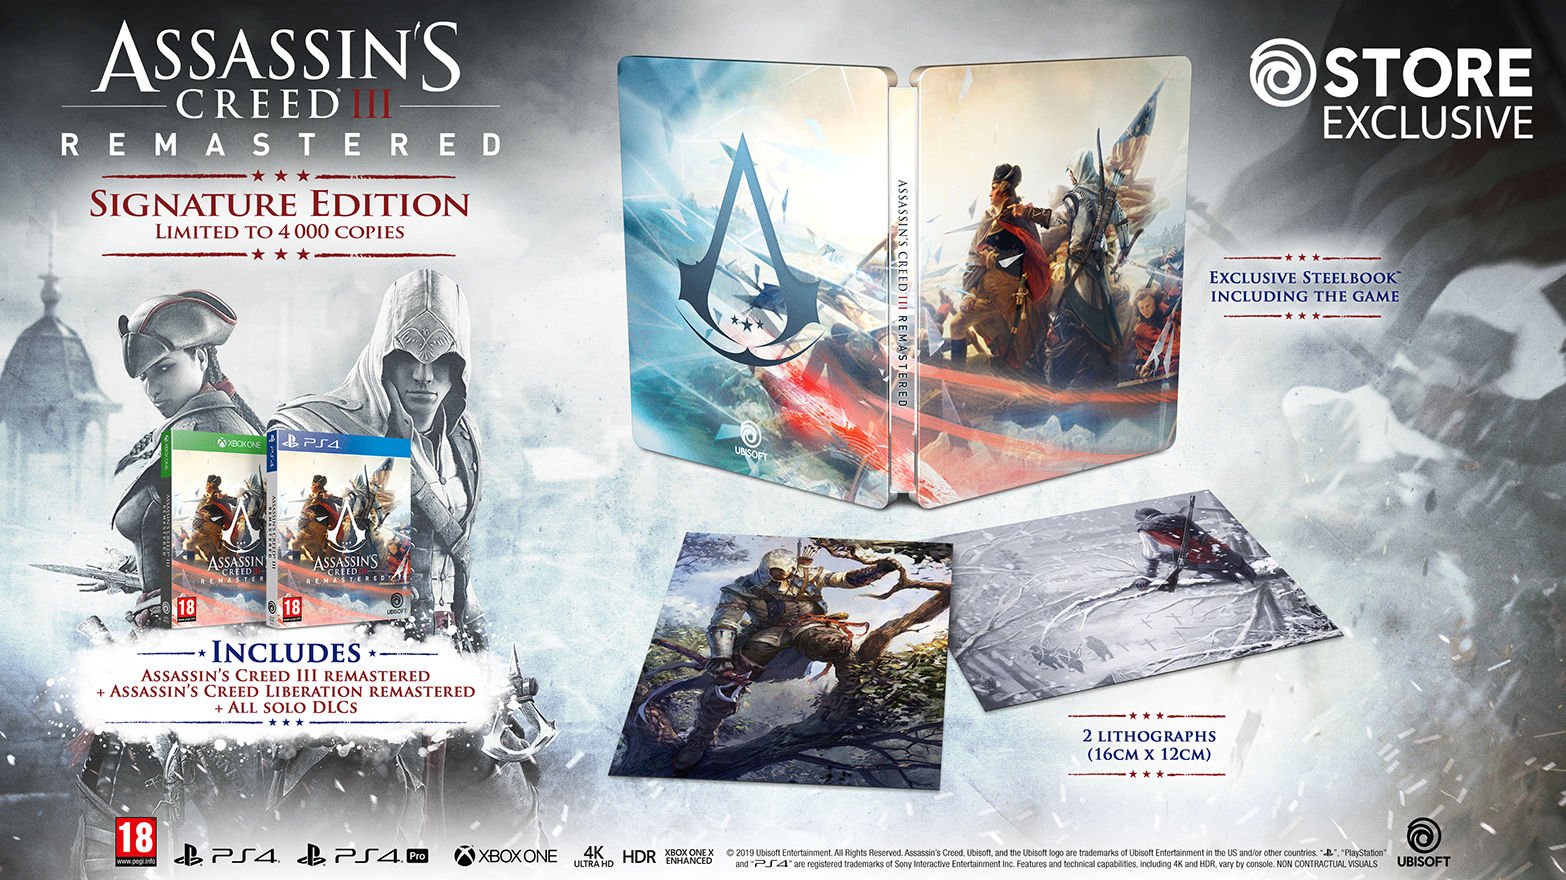 Assassin's Creed III Remastered - Signature Edition (PS4), Ubisoft